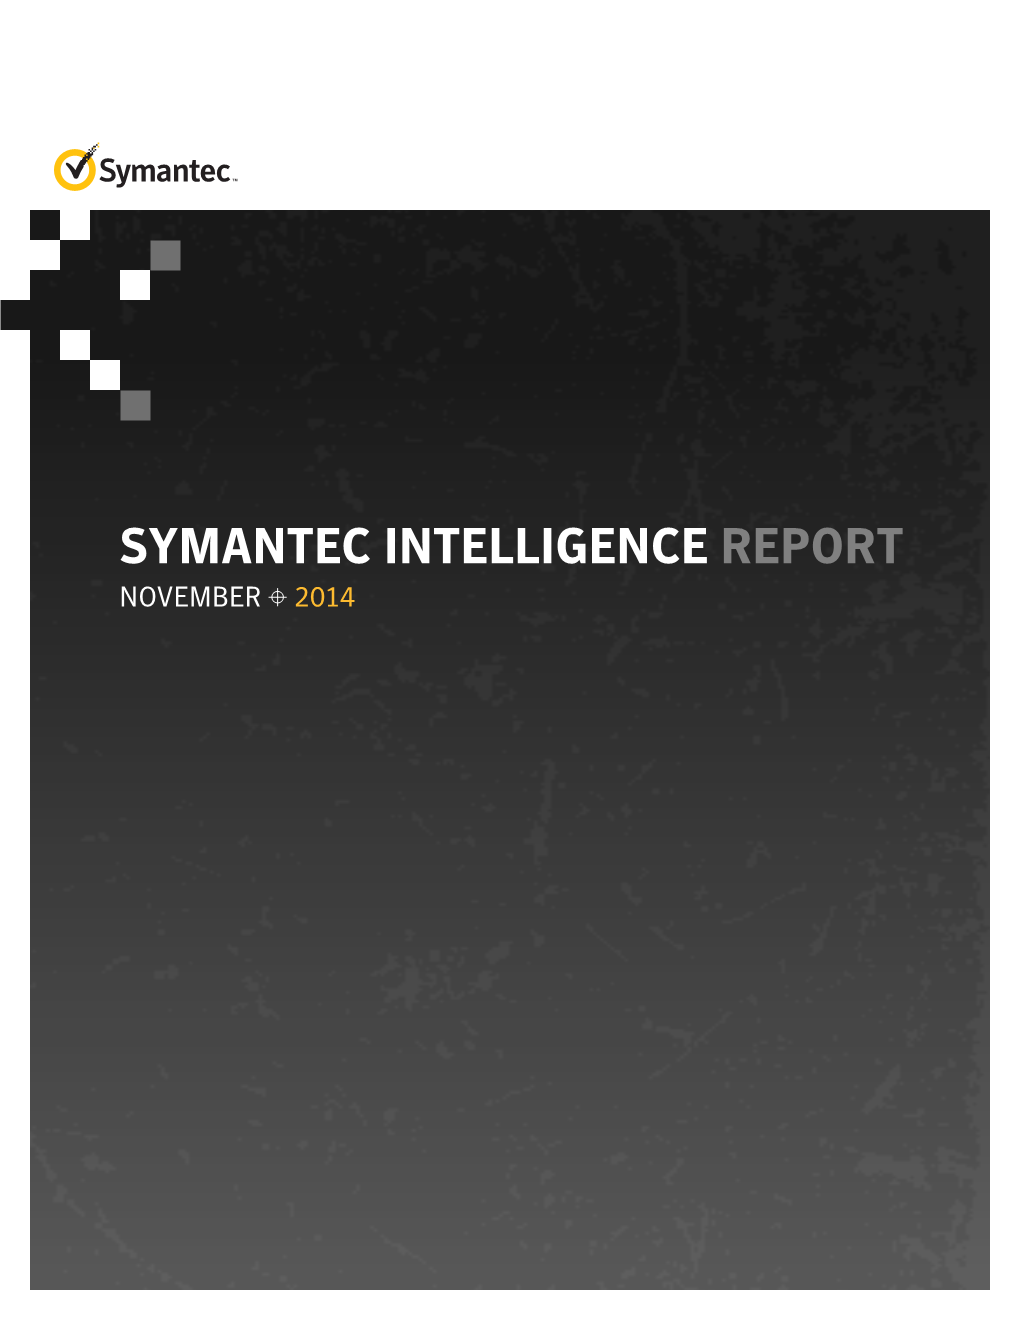 SYMANTEC INTELLIGENCE REPORT NOVEMBER 2014 P